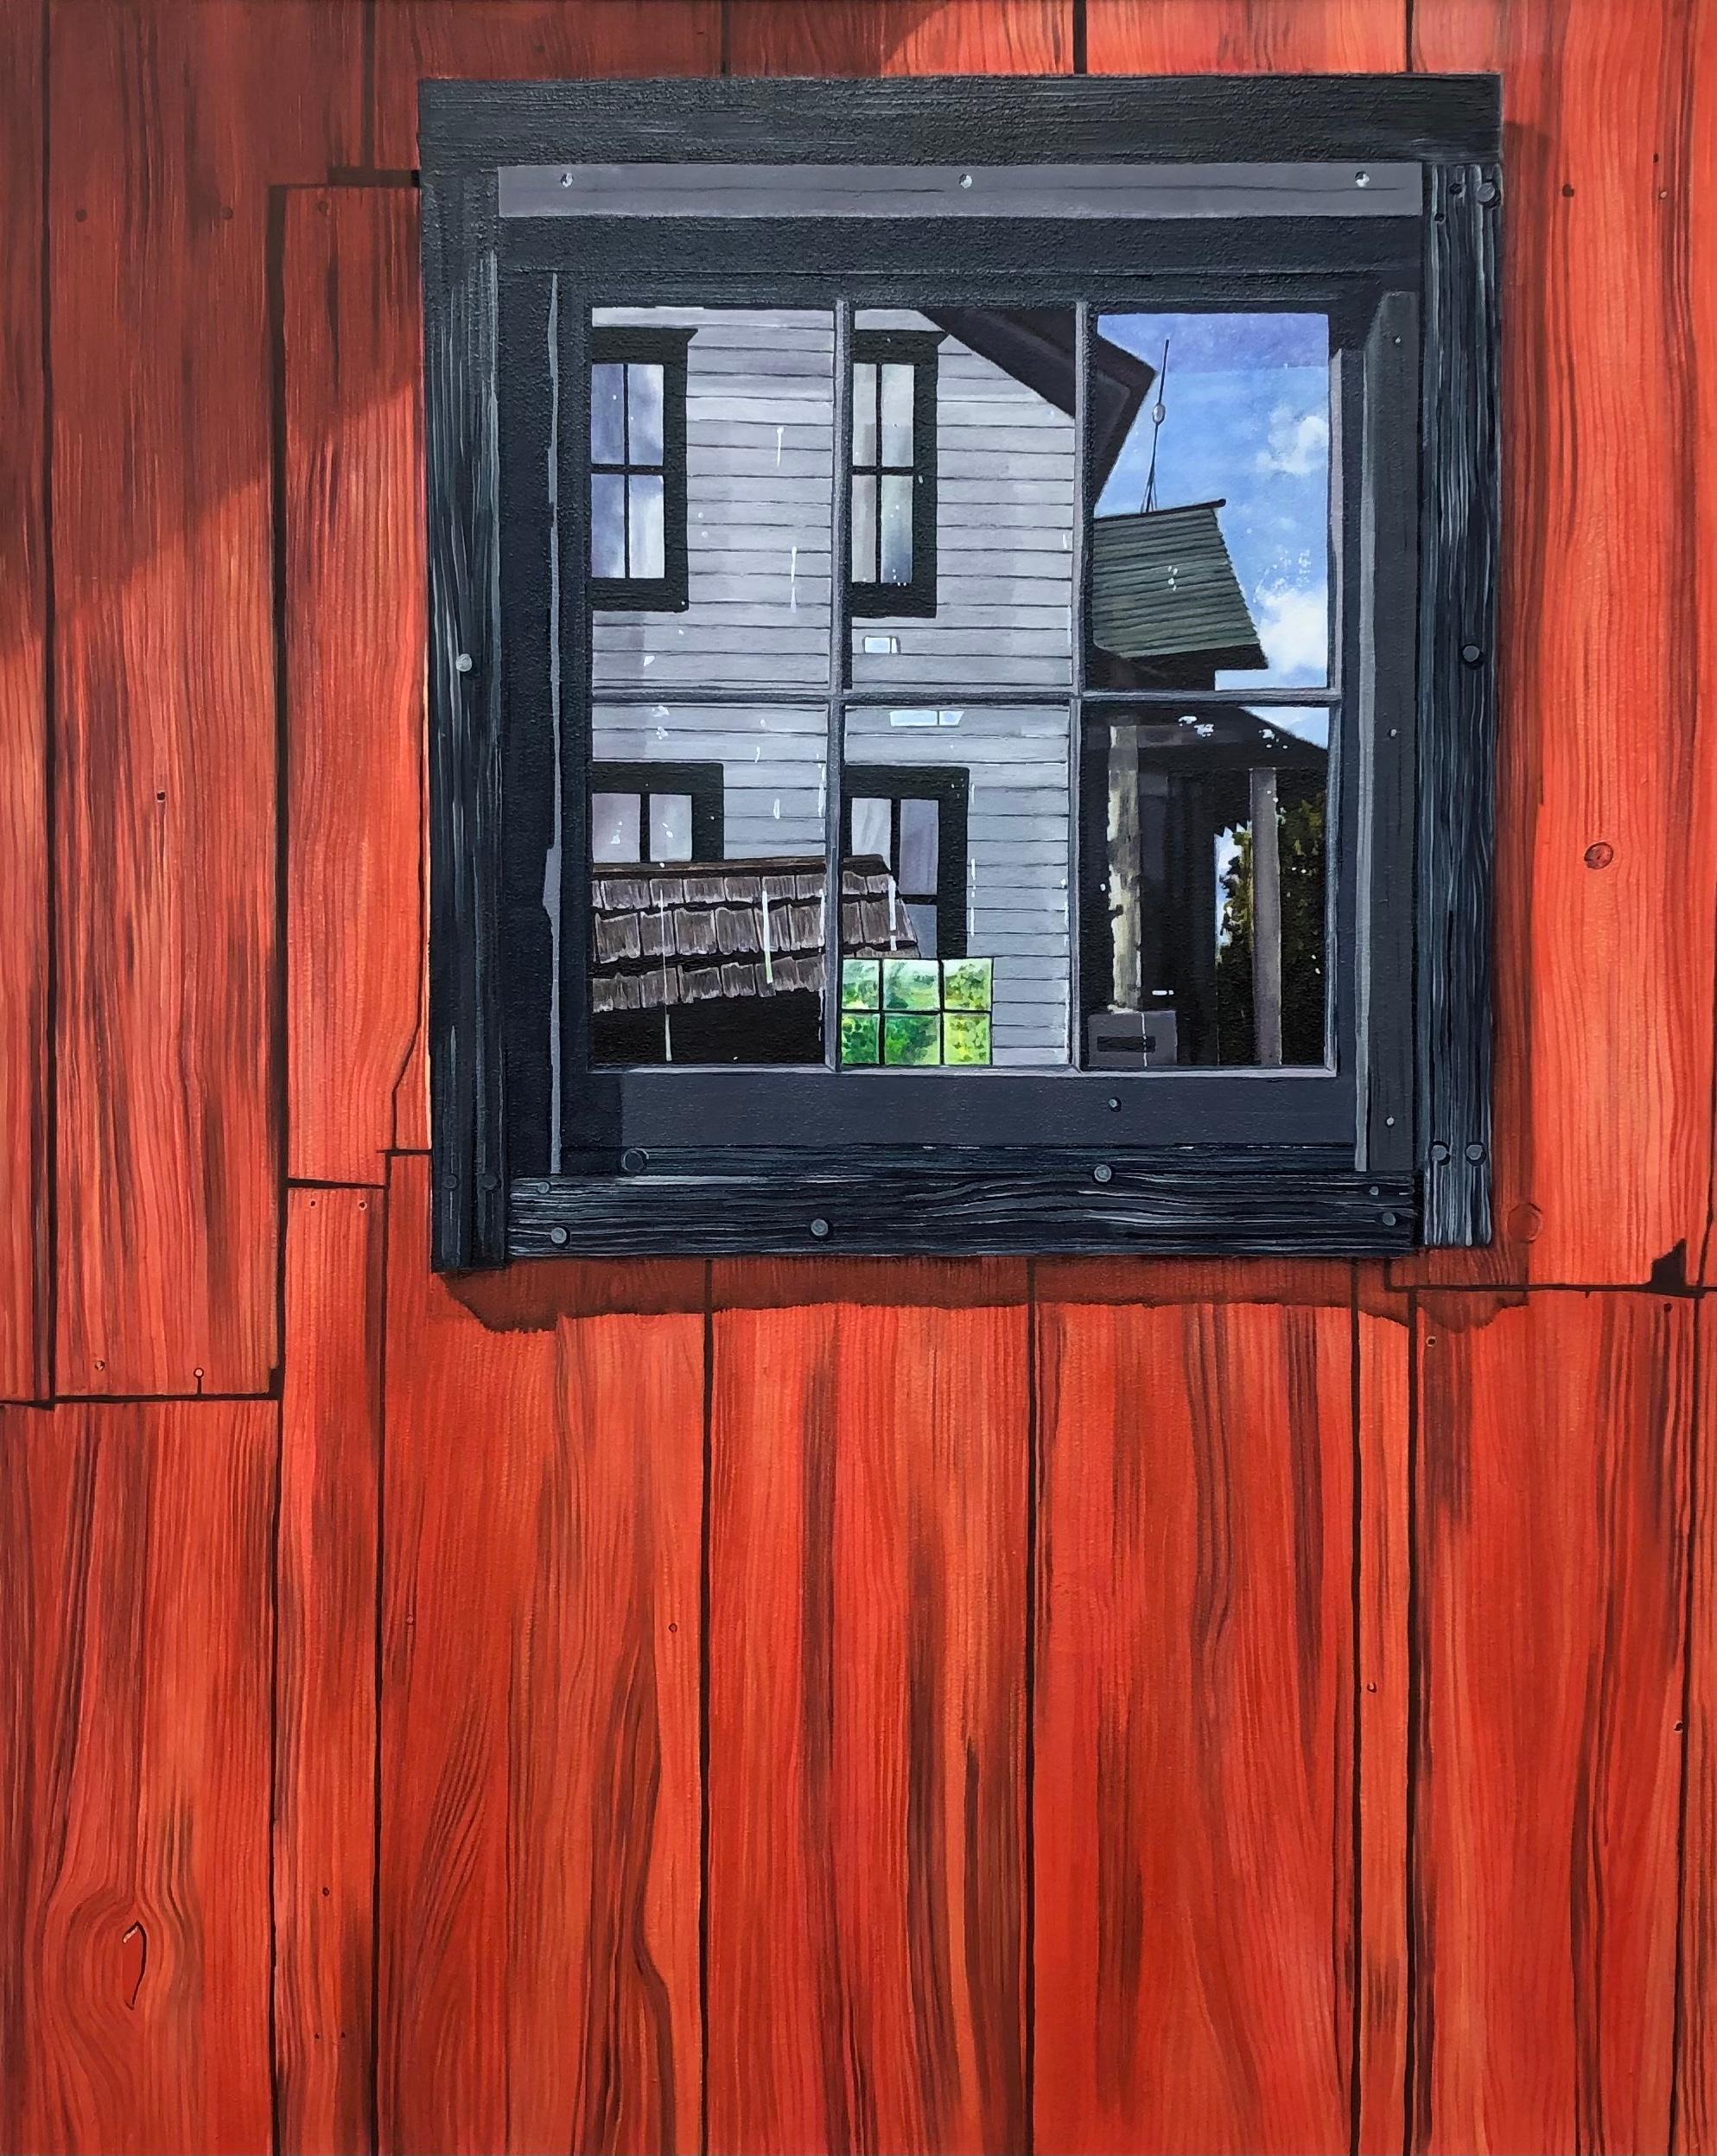 Amanda Acker Landscape Painting - Barn Window, Crimson Red Wood, Blue Sky, Green Trees Reflection